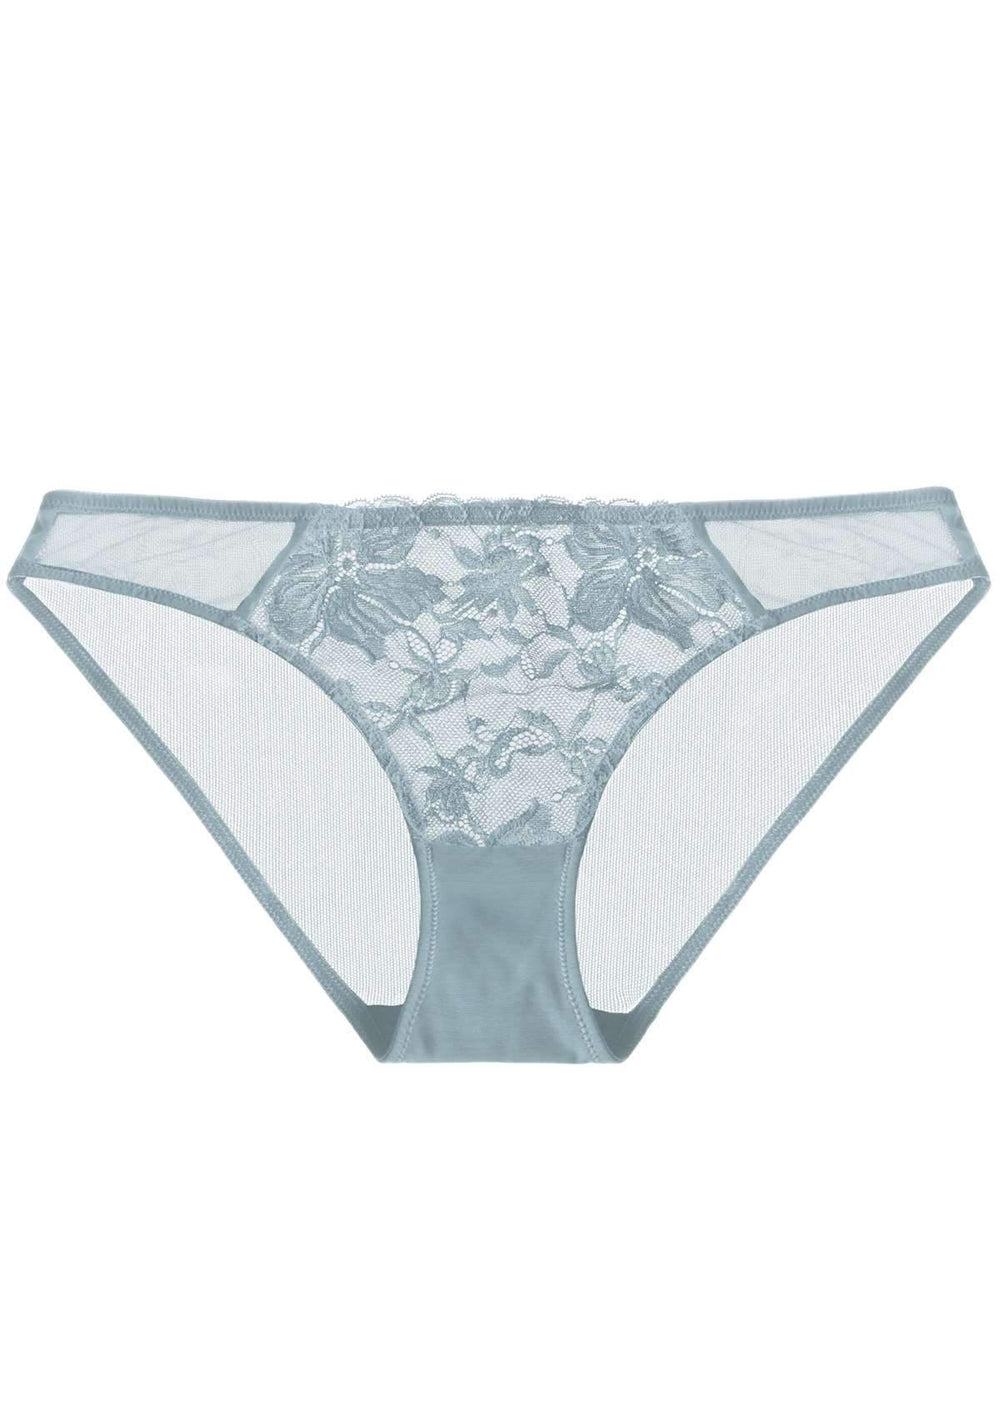 HSIA Breathable Sexy Lace Pewter Blue Bikini Underwear